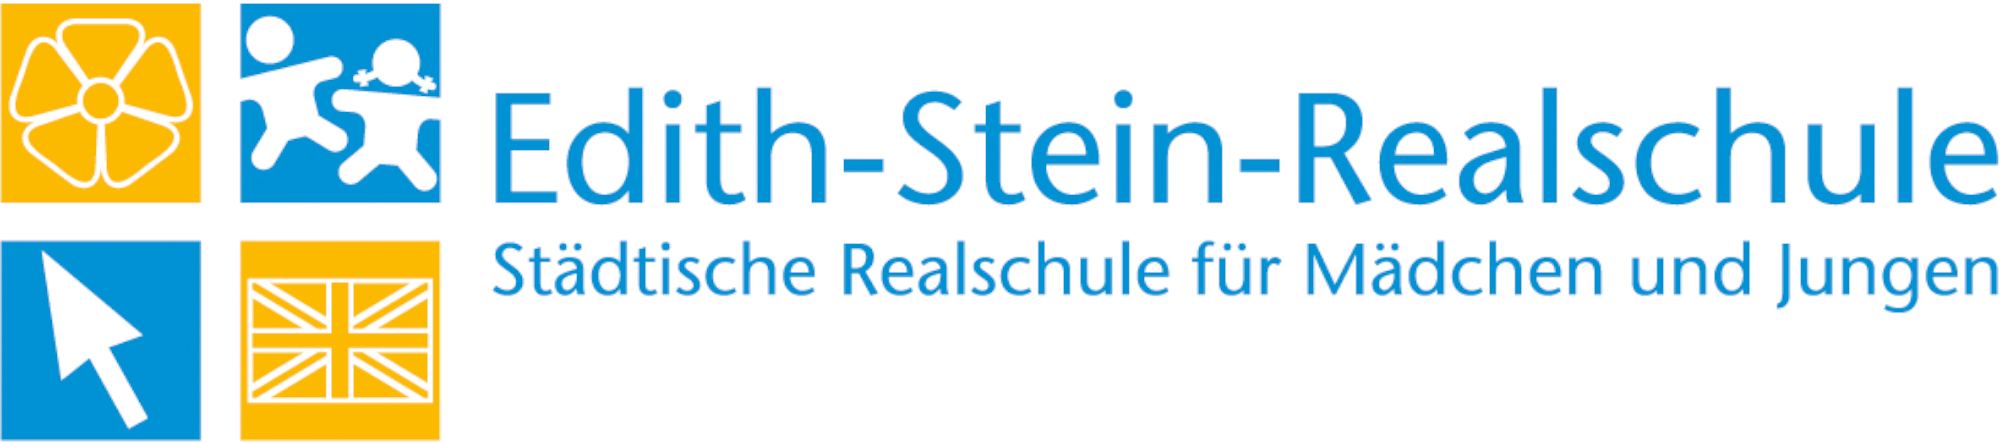 Edith-Stein-Realschule